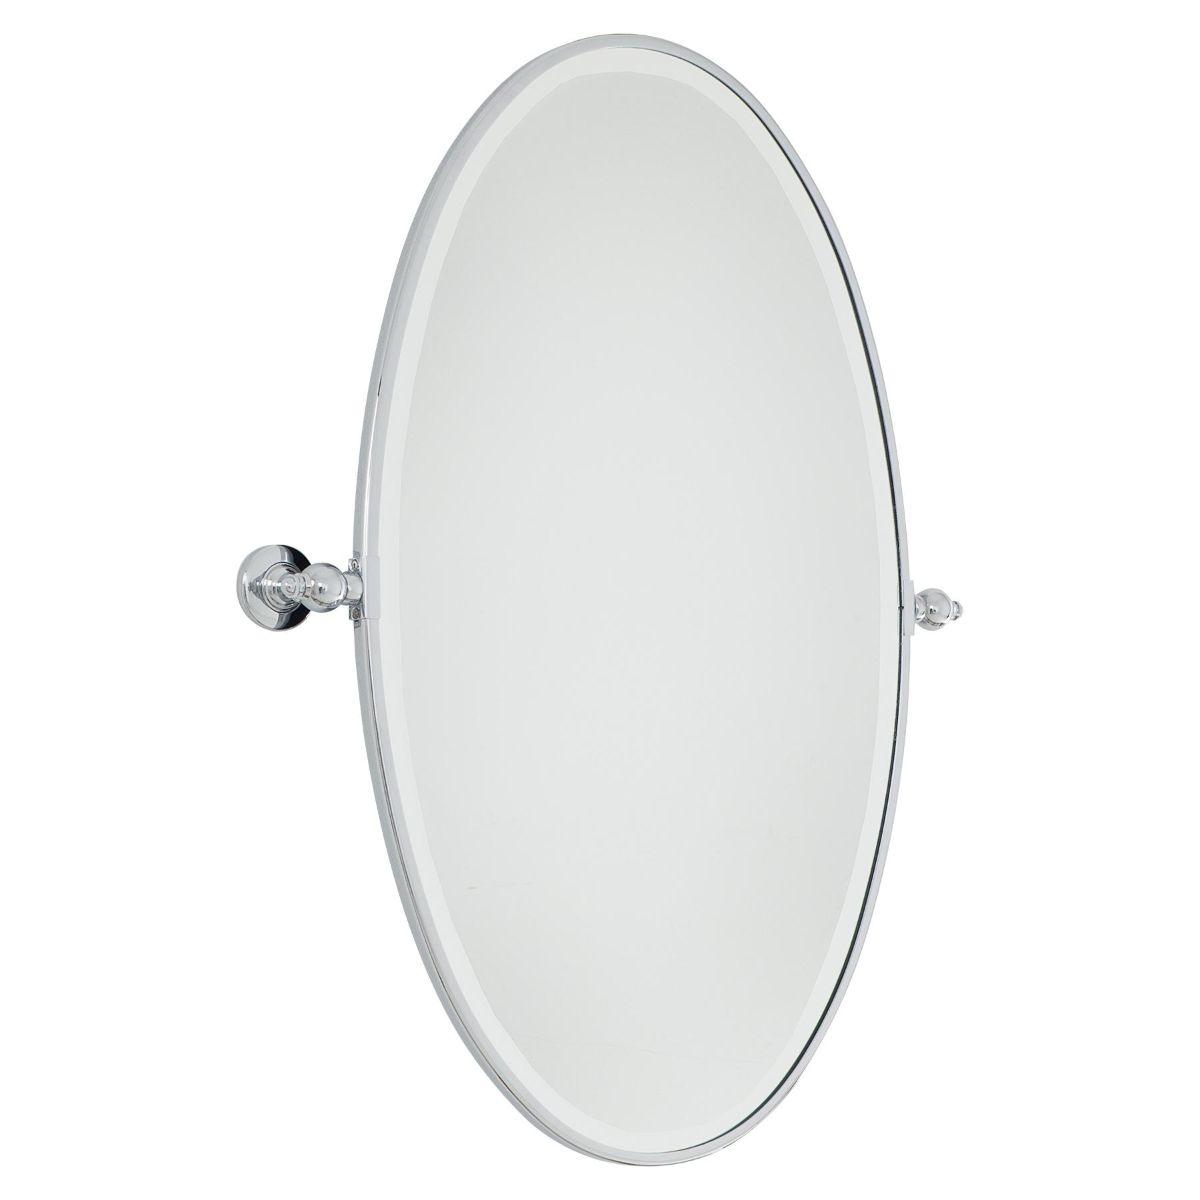 Pivoting Mirrors 27 In. X 33.75 In. Bathroom & Vanity Mirror